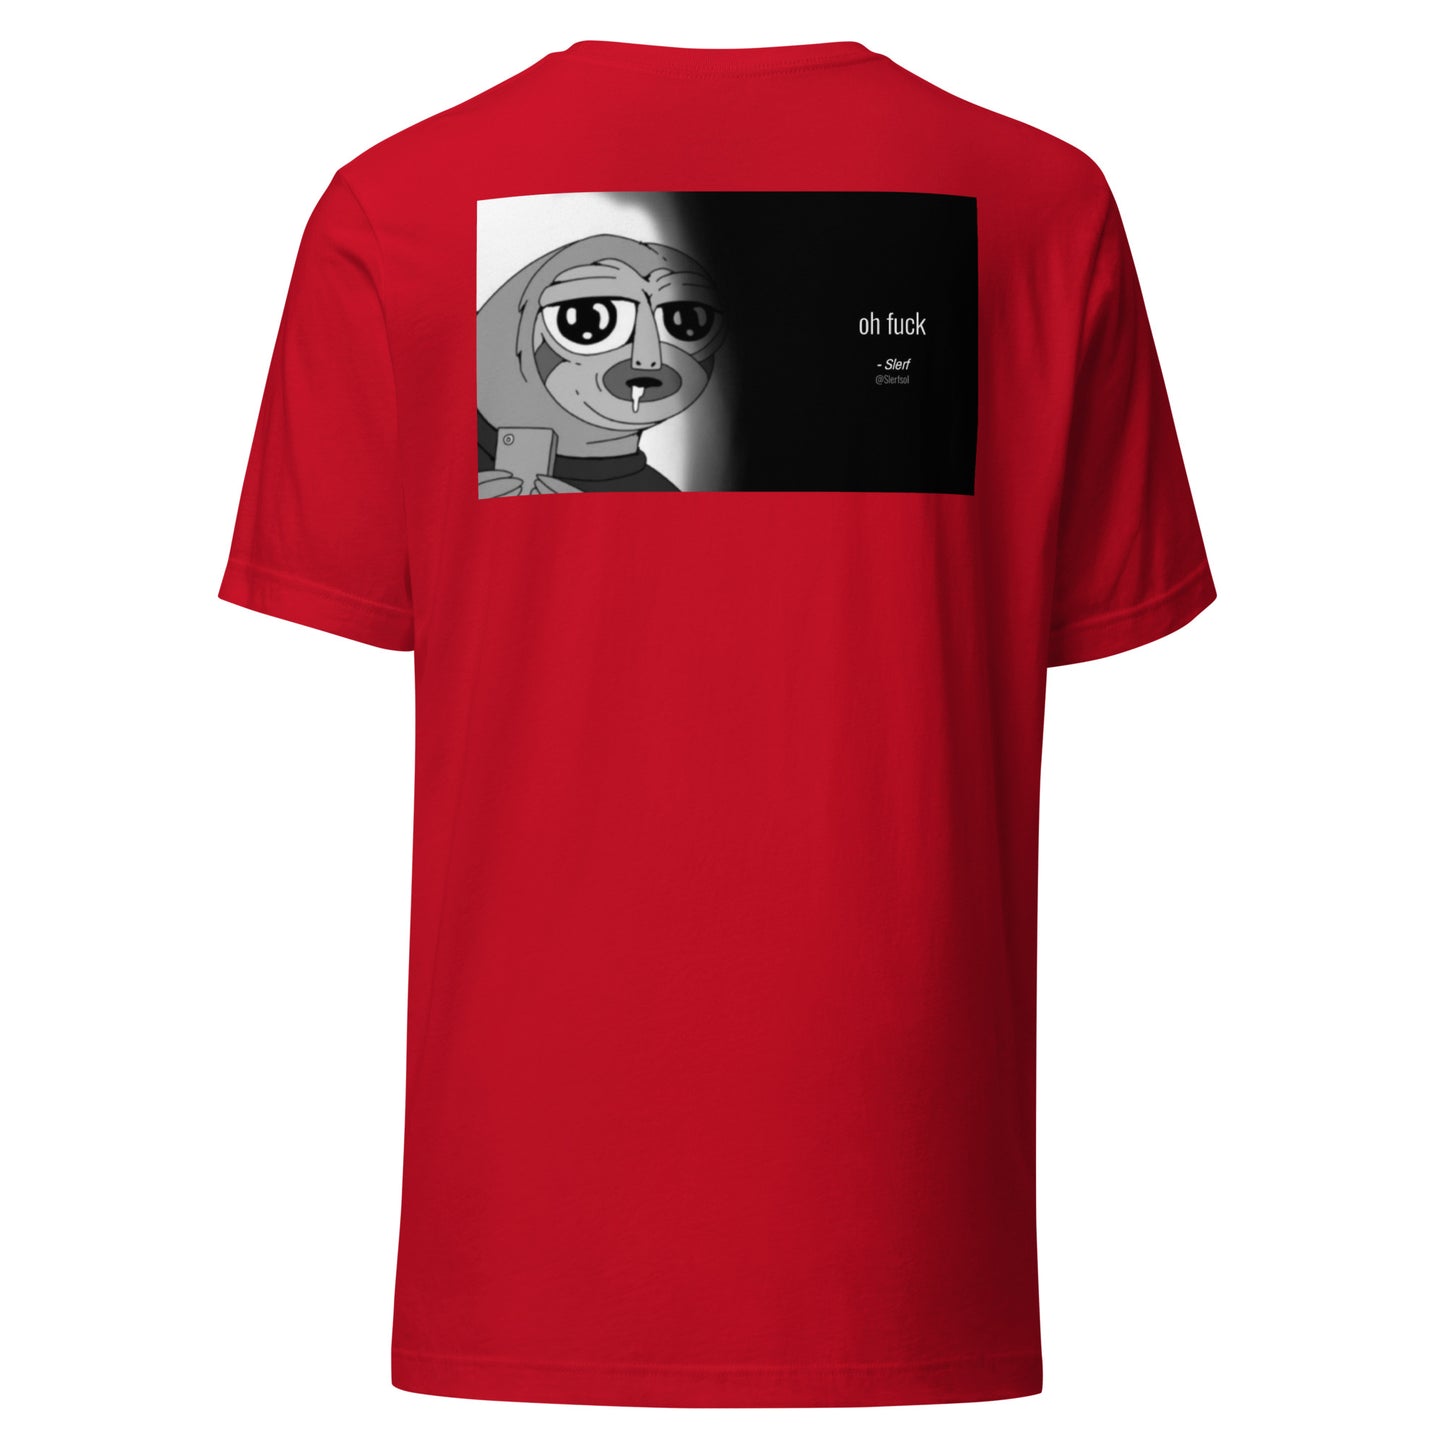 Slerf the Sloth t-shirt